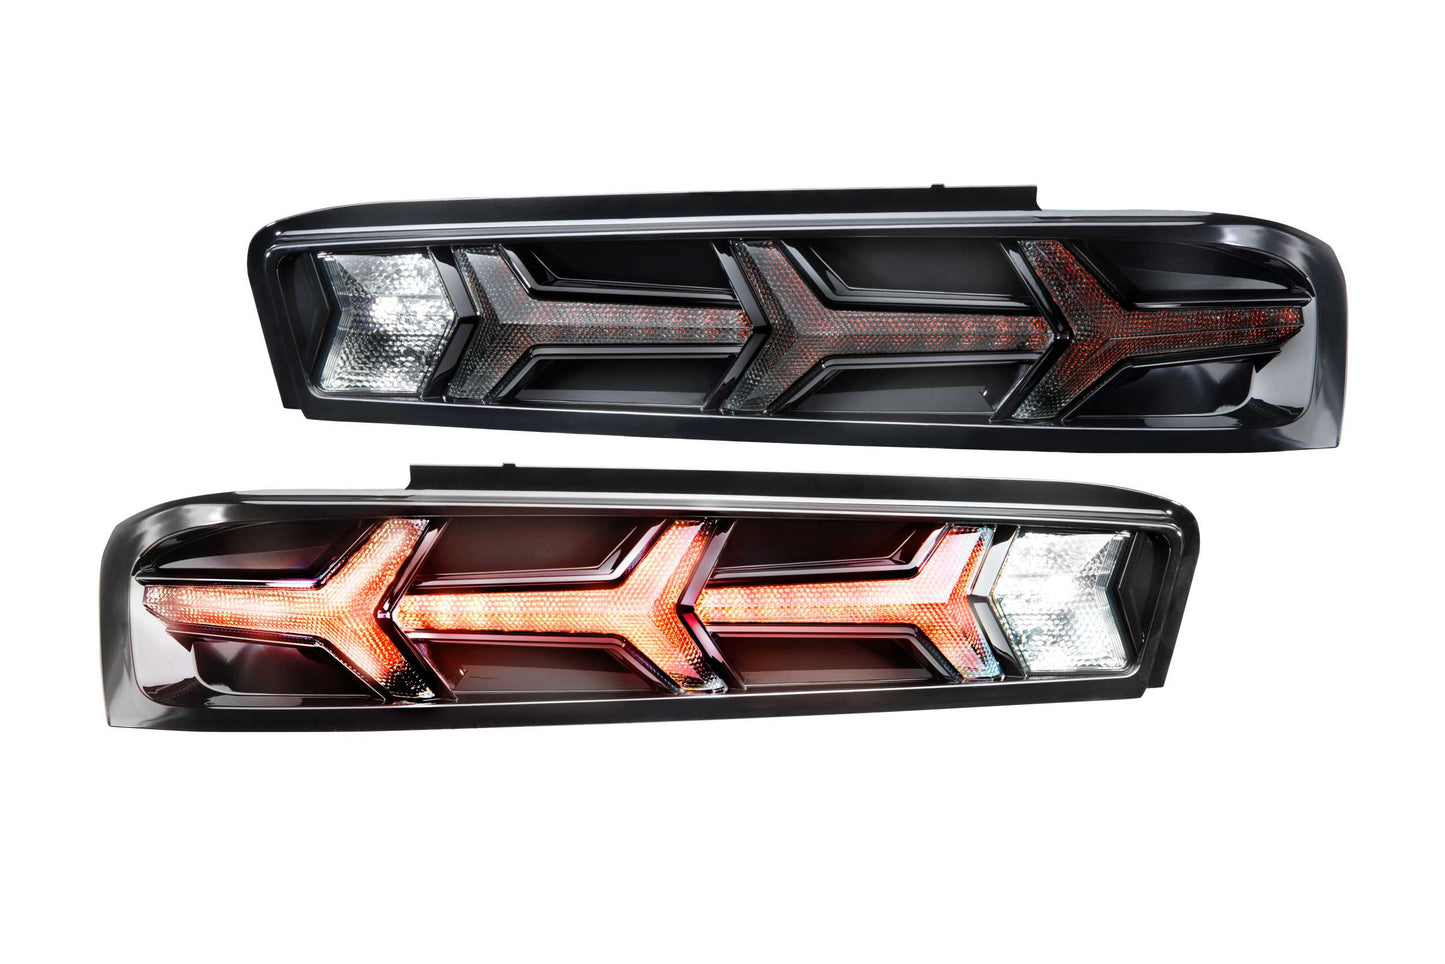 XB LED Tails: Chevrolet Camaro (16-18) (Pair / Lambo / Smoked)